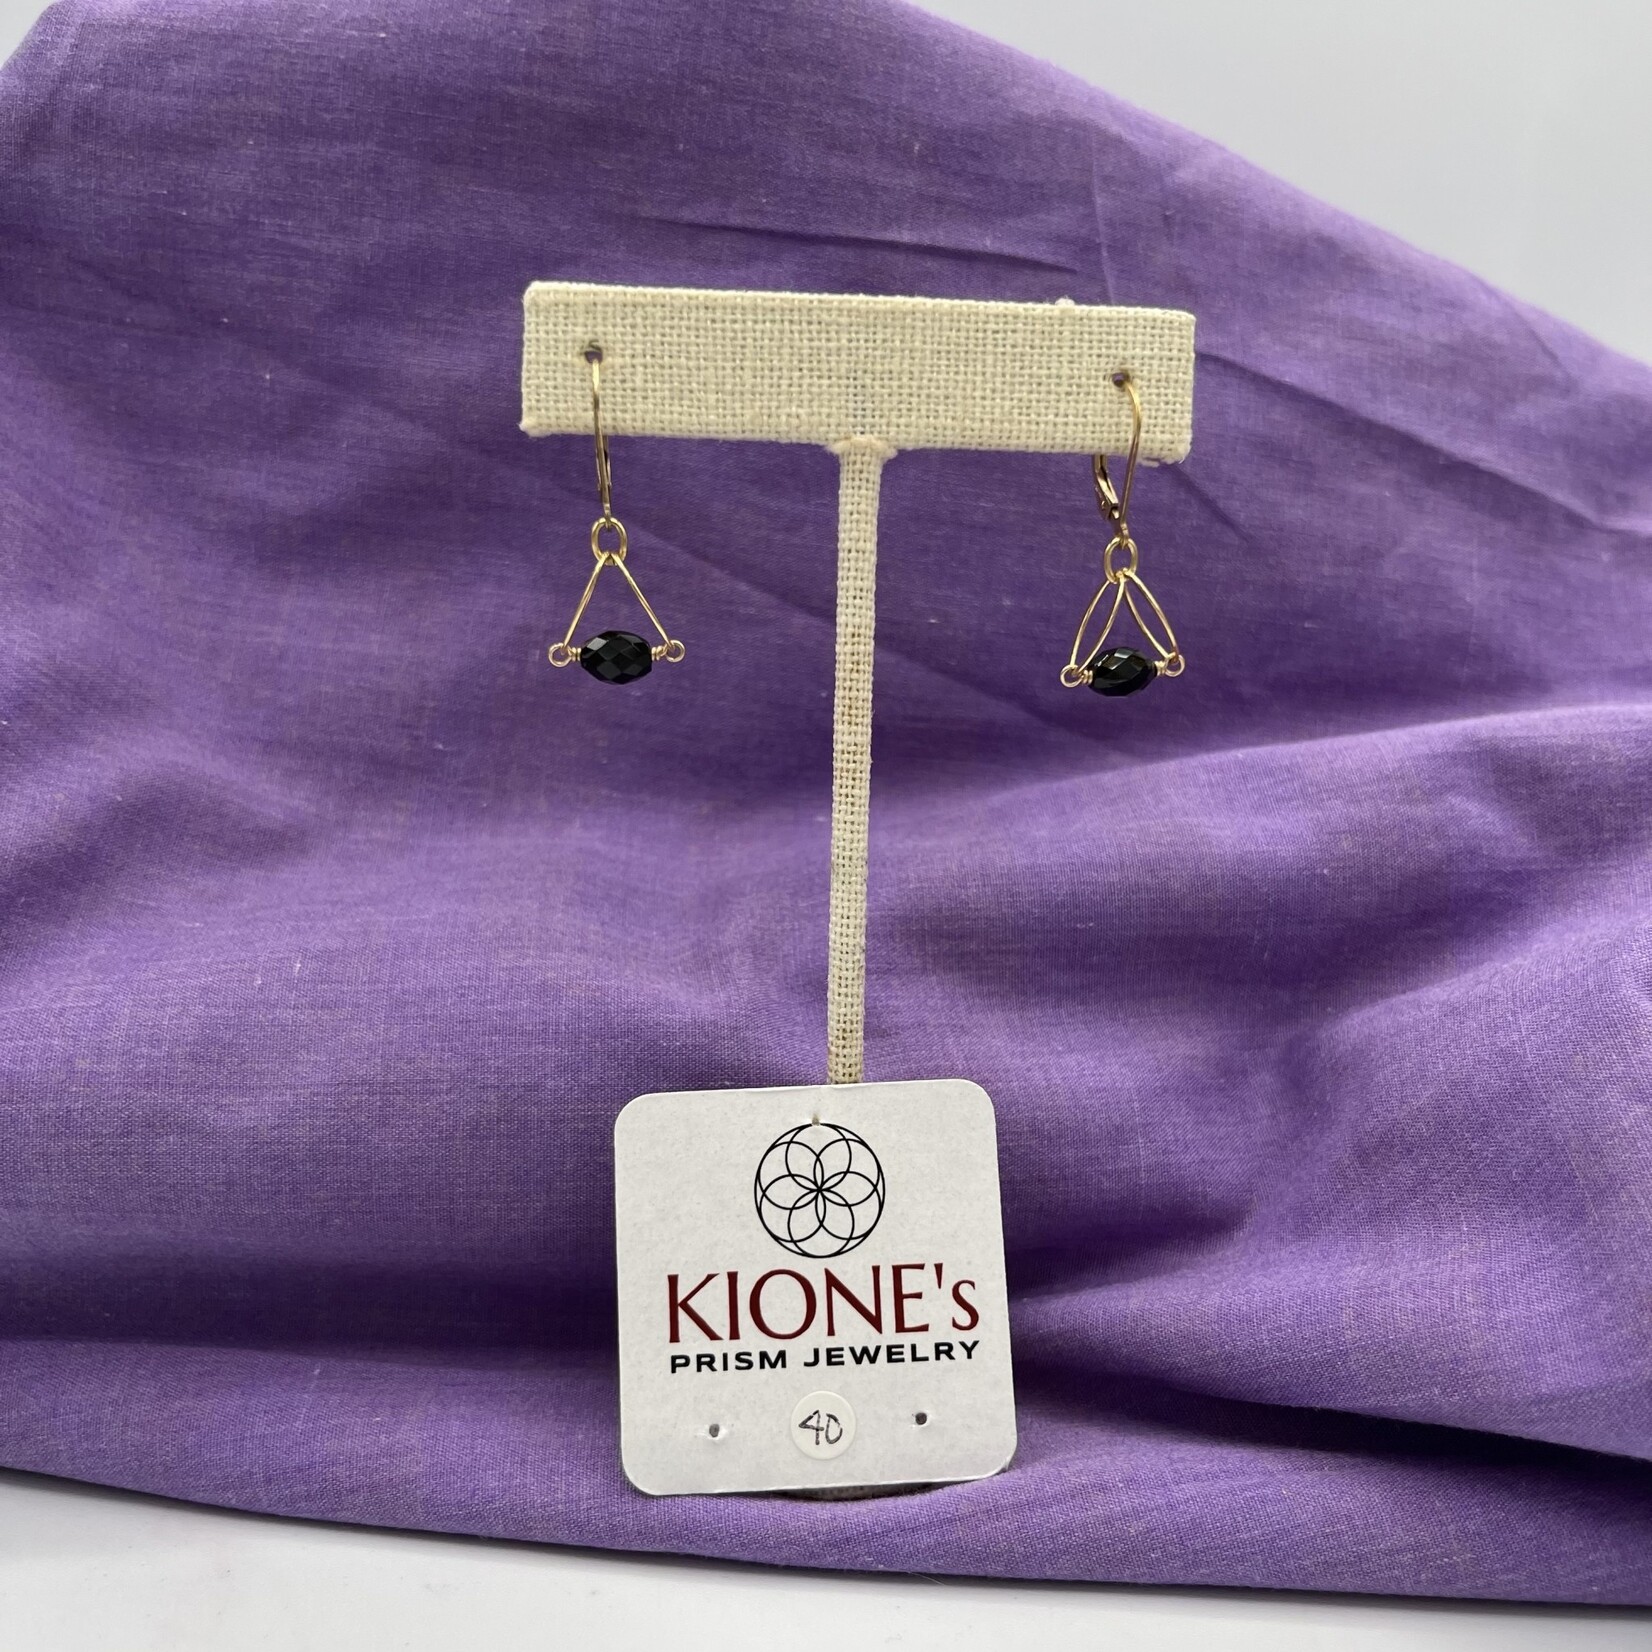 Kione’s Prism Jewelry Black Spinel & 14kt Yellow GF Earrings